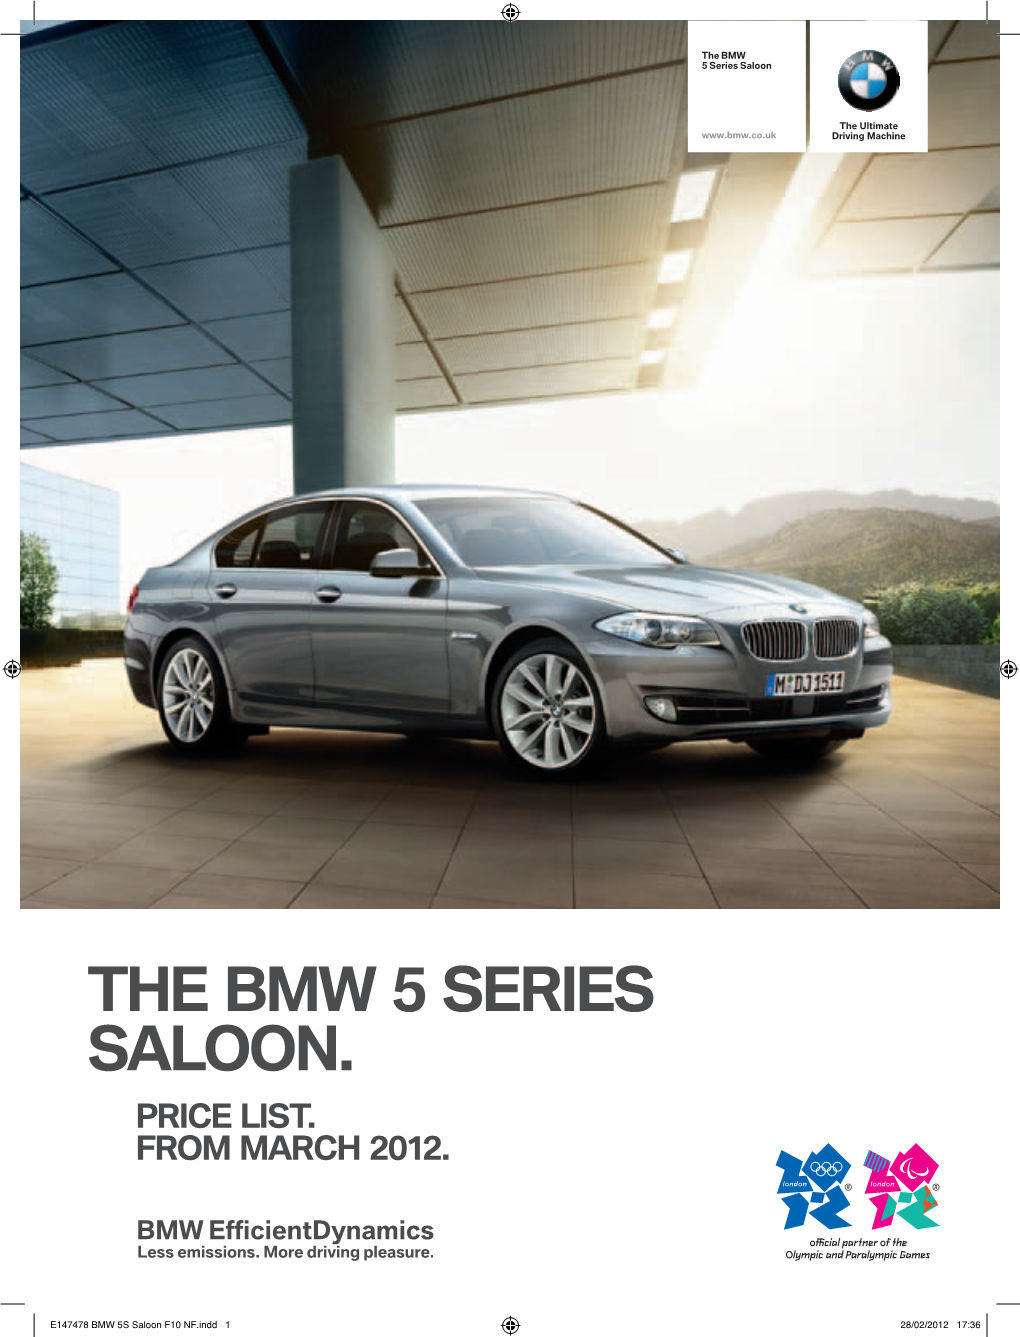 THE BMW 5 Series SALOON. Price List